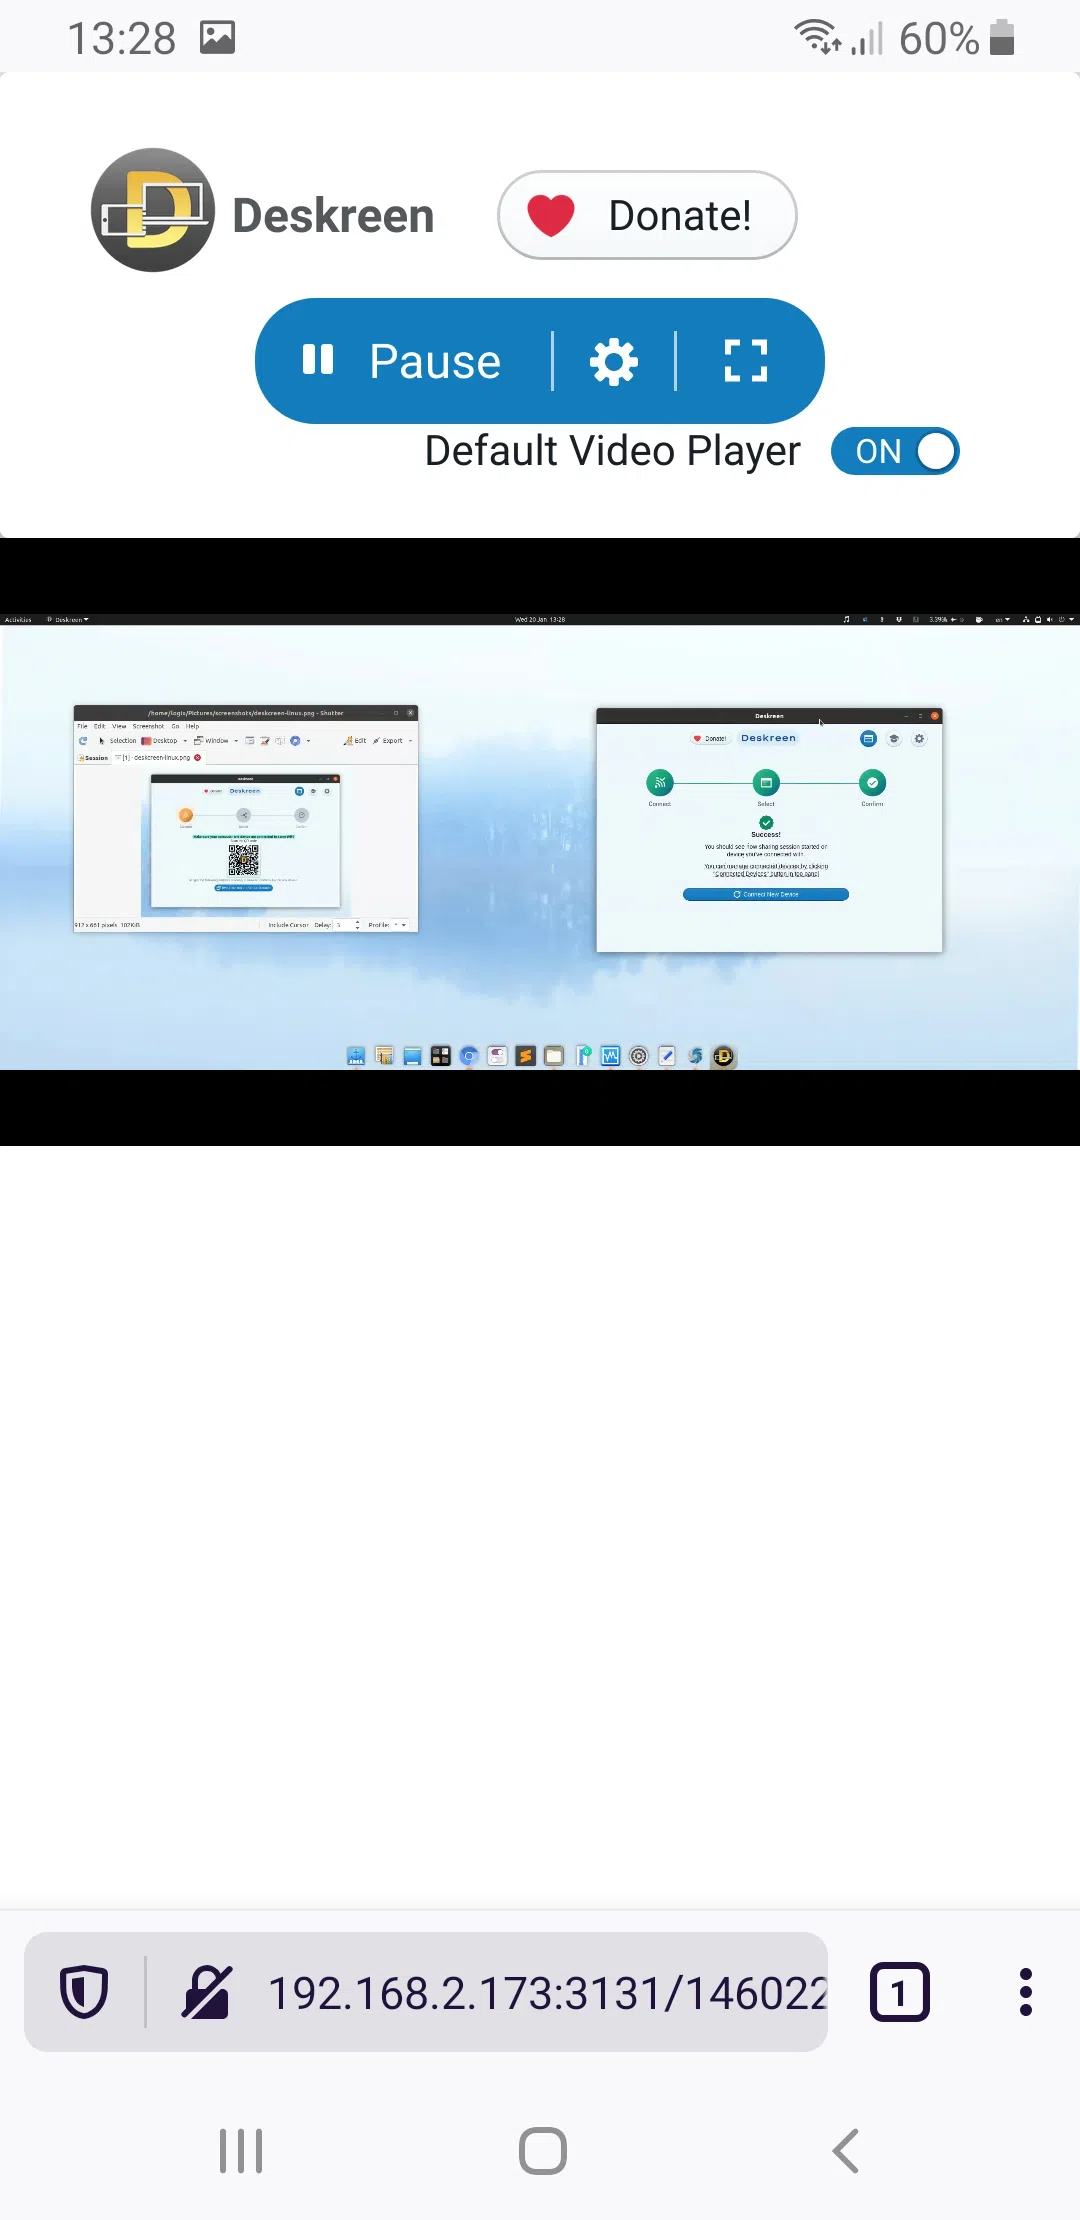 Deskcreen mobile browser working